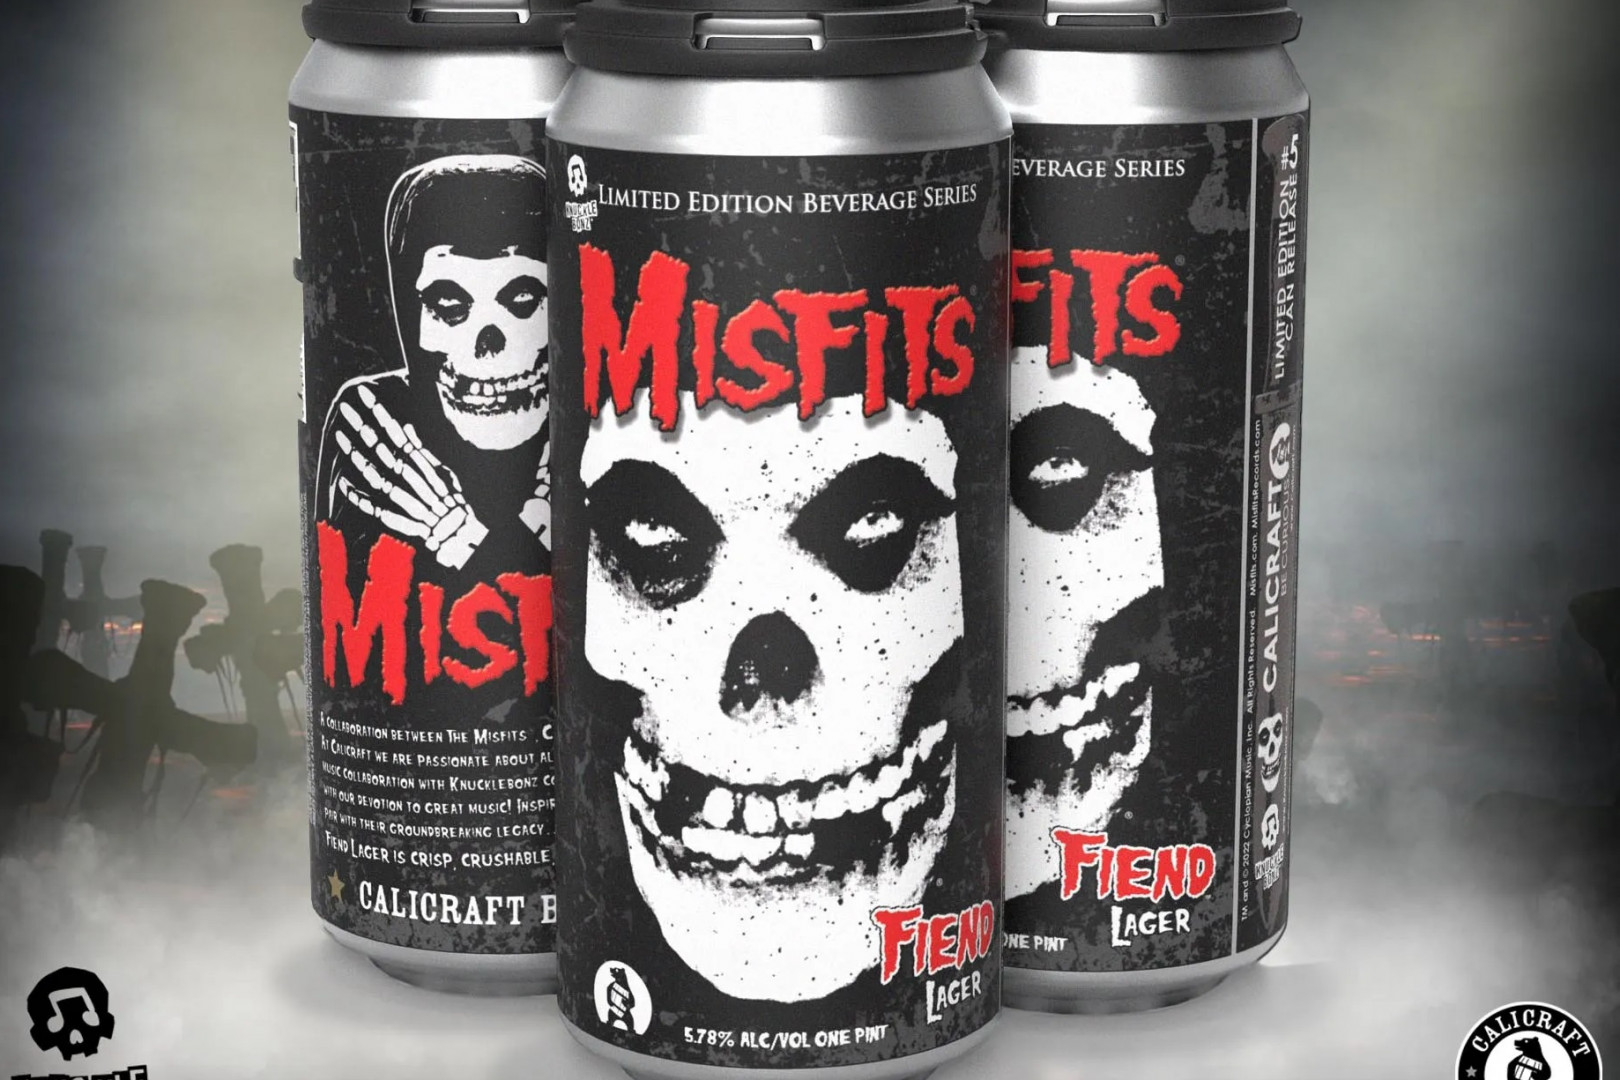 Misfits release beer